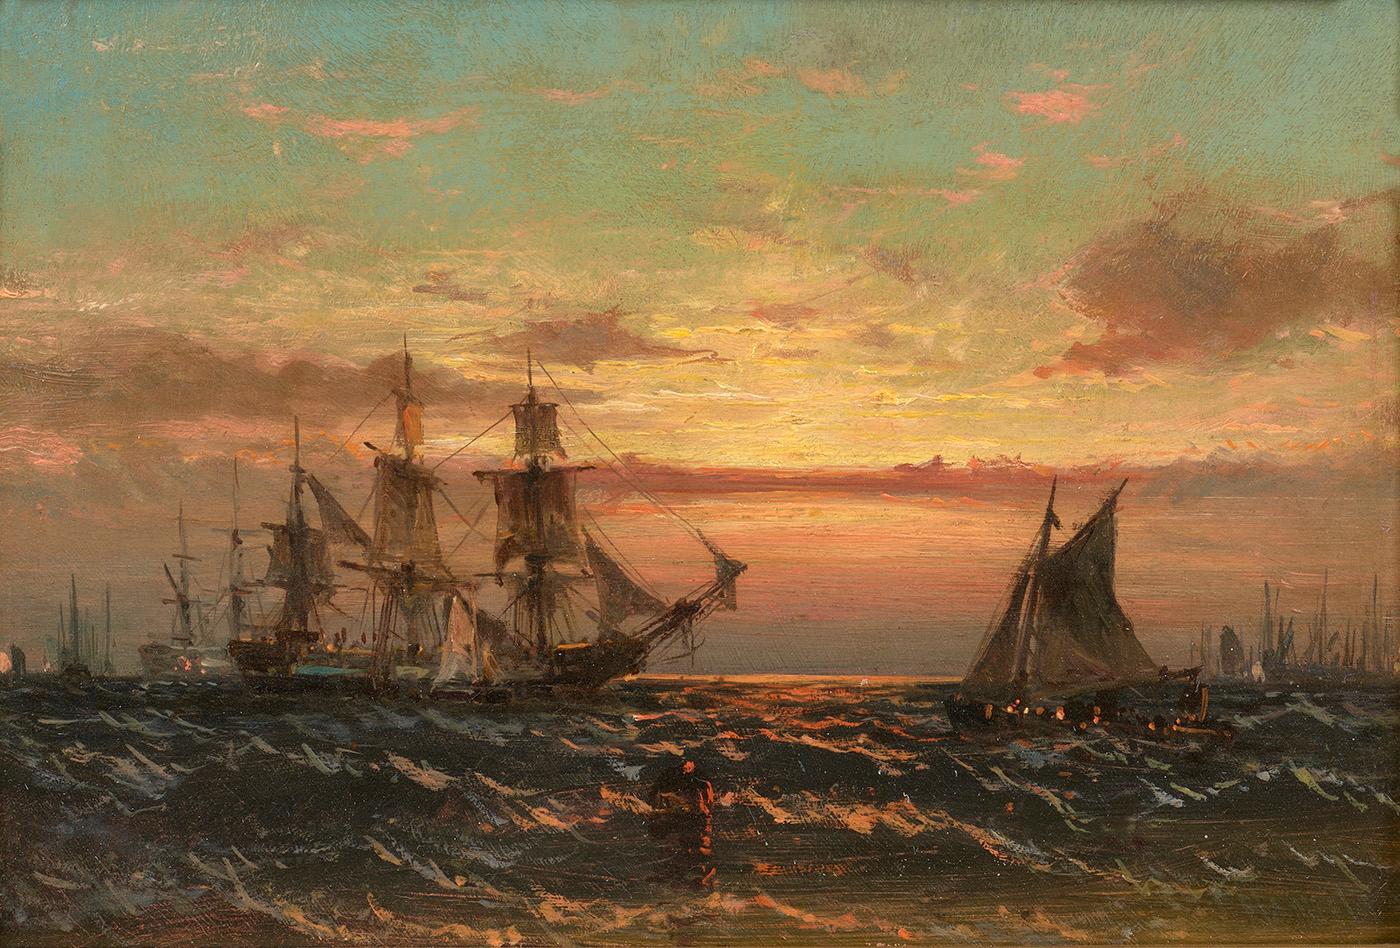 James Hamilton Landscape Painting - Coastal Scene at Sunset with Ships 